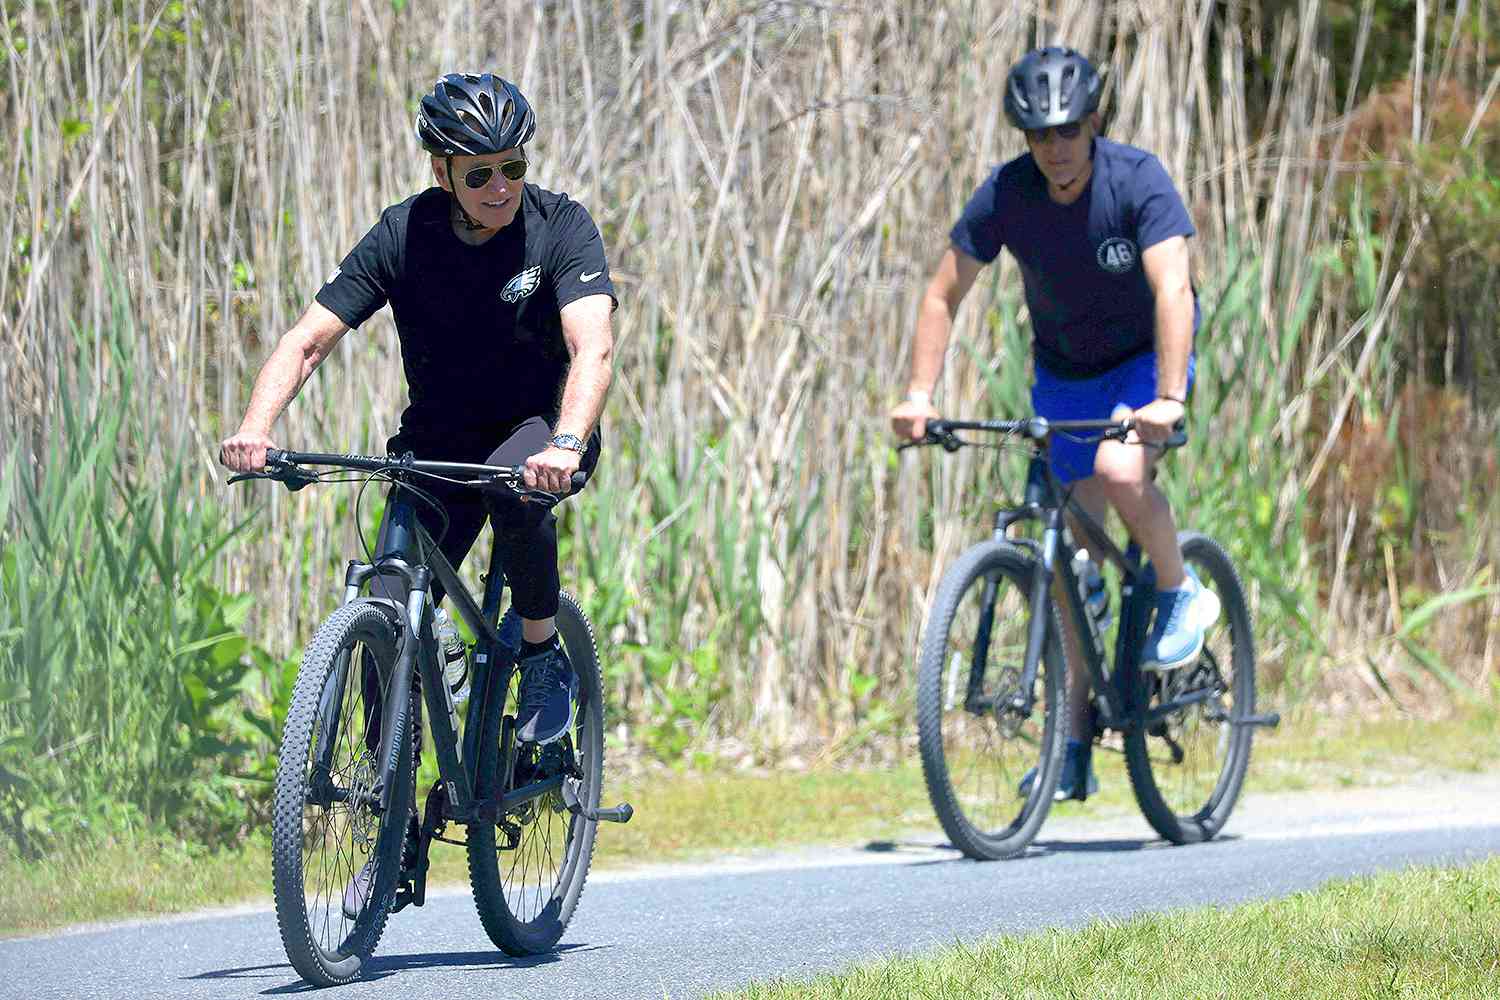 Joe Biden Spent Weekend with Son Hunter Before Start of Federal Gun Trial, Riding Bikes and Attending Church